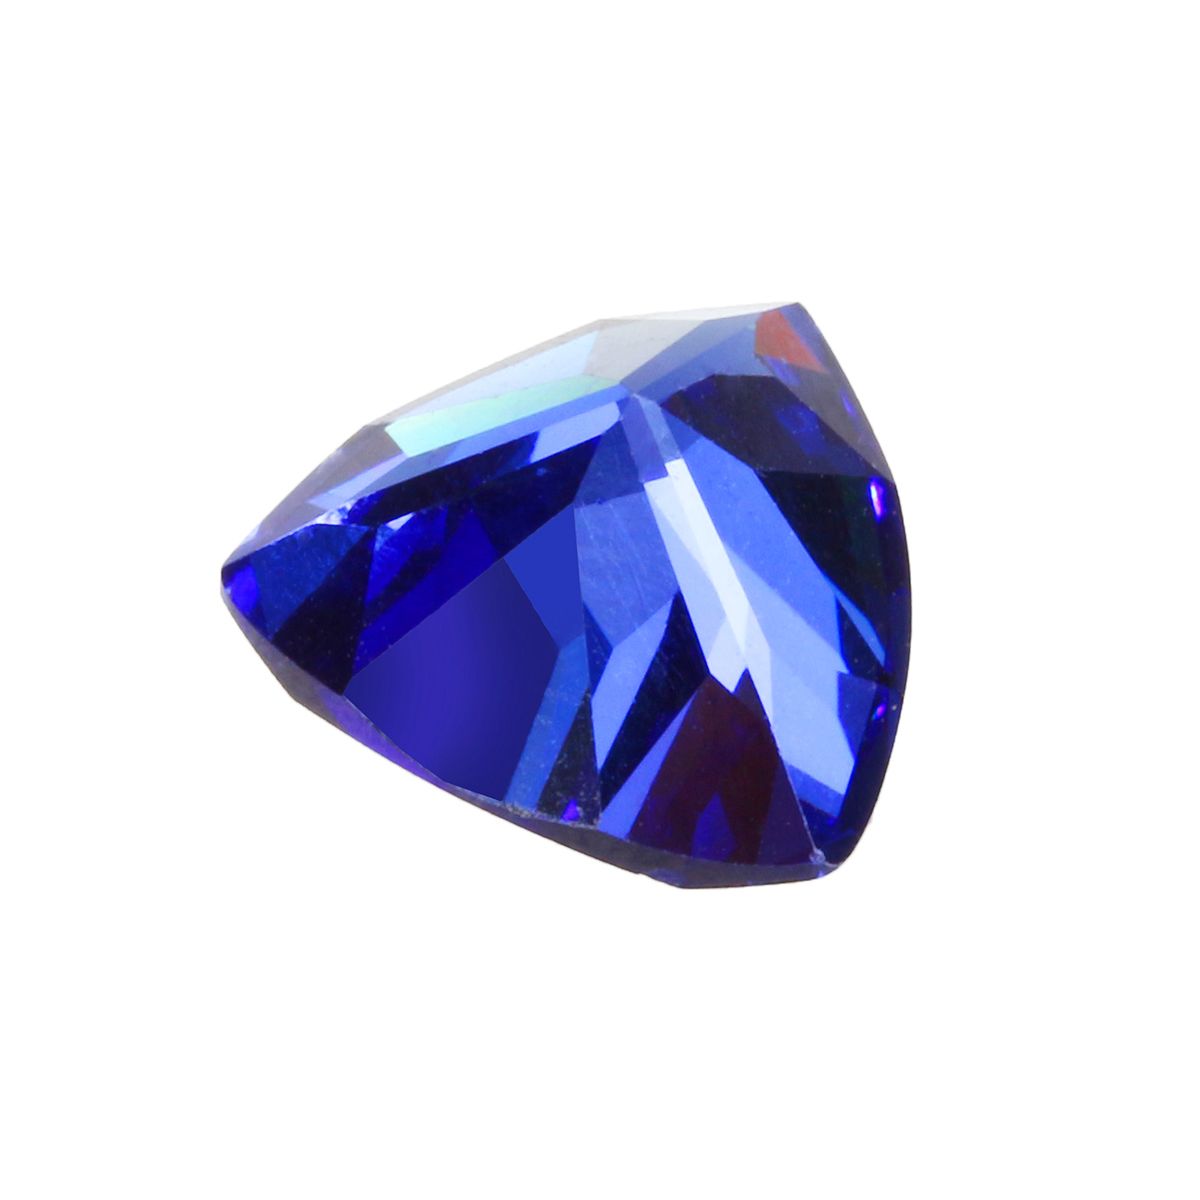 AAAAA-Bright-Blue-Triangle-Cut-Gemstone-Unheated-Zircon-1120ct-12x12mm-Jewelry-Decorations-1551443